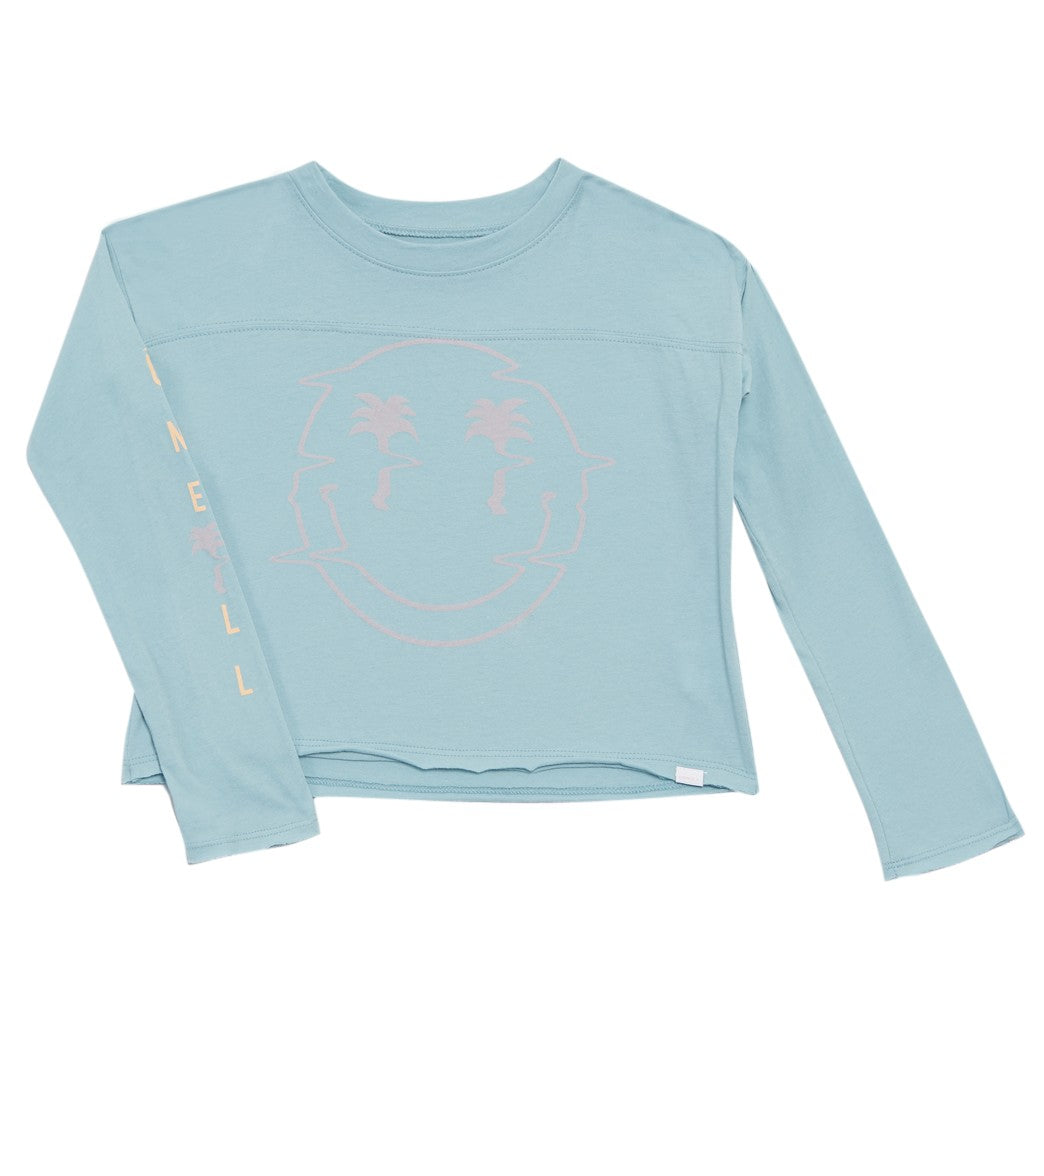 O'neill Girls' Happiness Tee Shirt - Stone Blue X-Small 5/6 Cotton - Swimoutlet.com